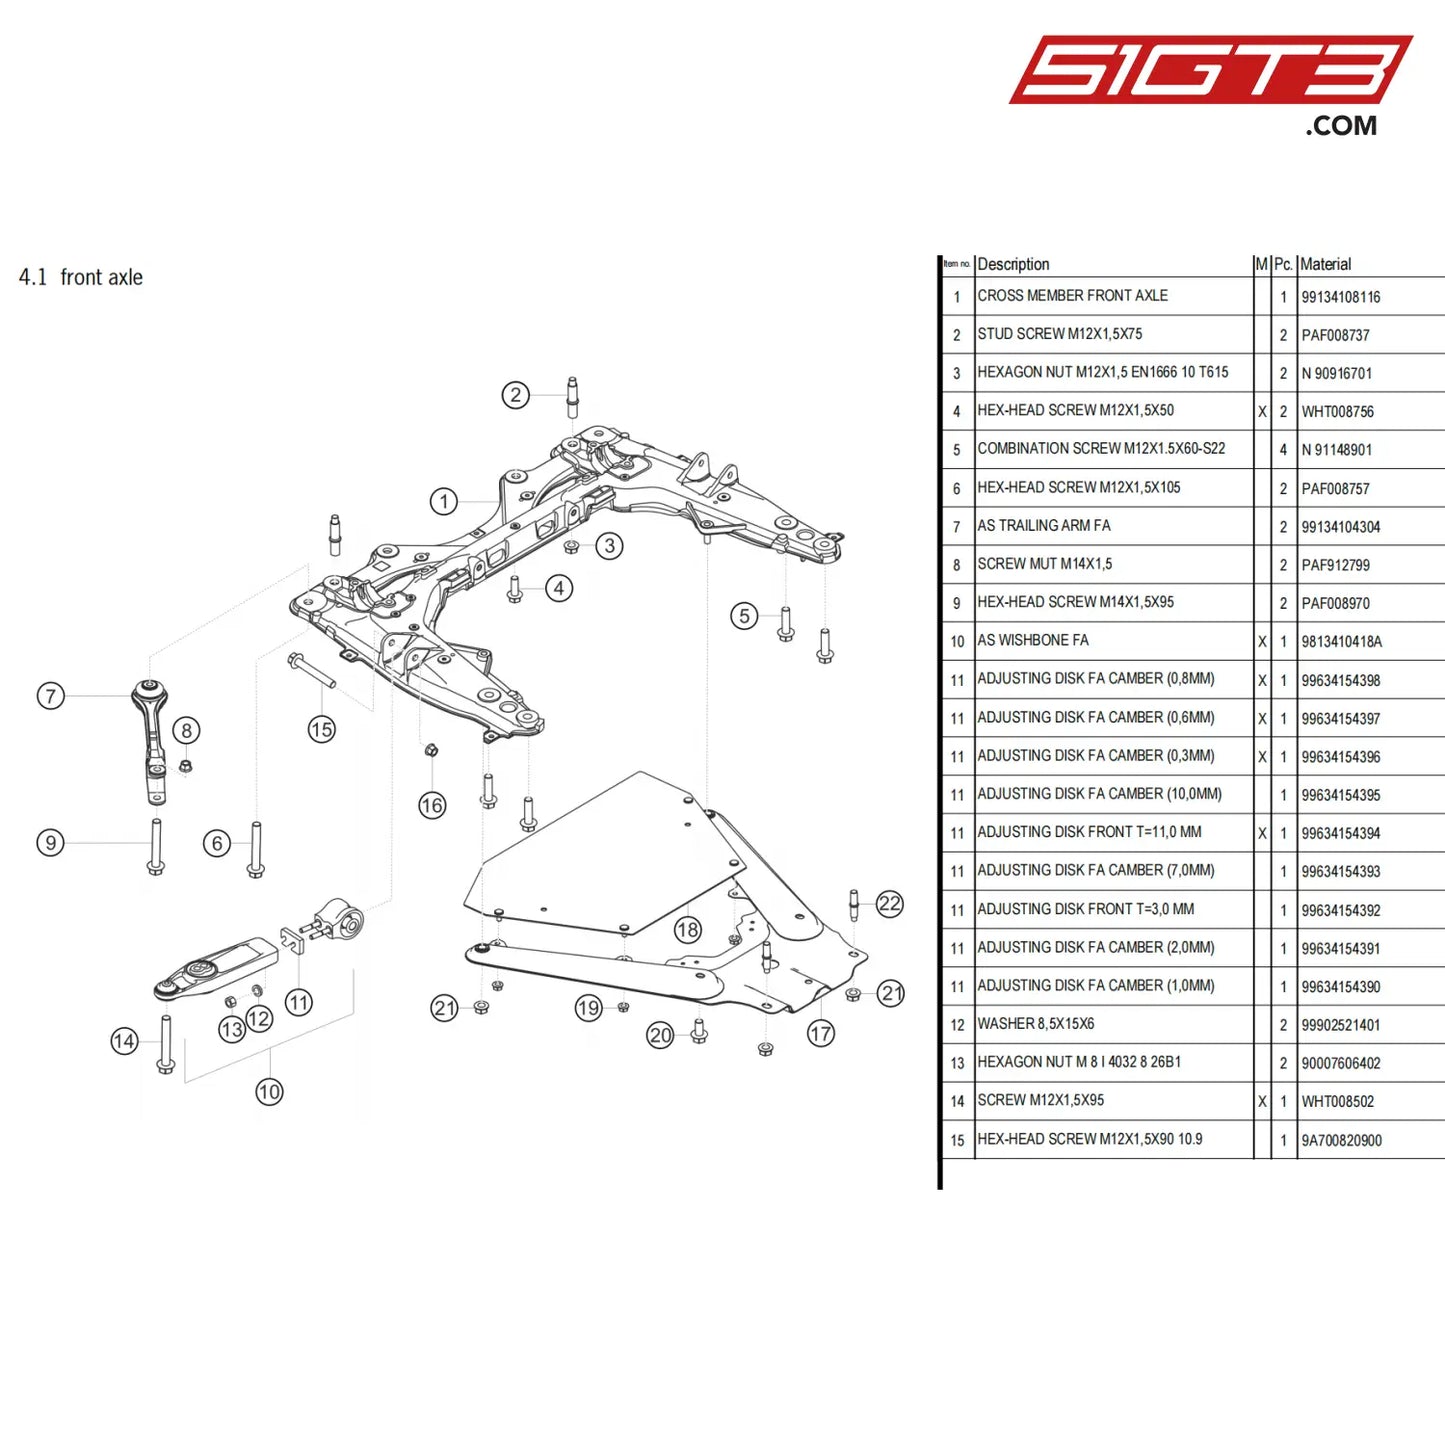 Combination Screw M12X1.5X60-S22 - N 91148901 [Porsche 718 Cayman Gt4 Clubsport] Front Axle